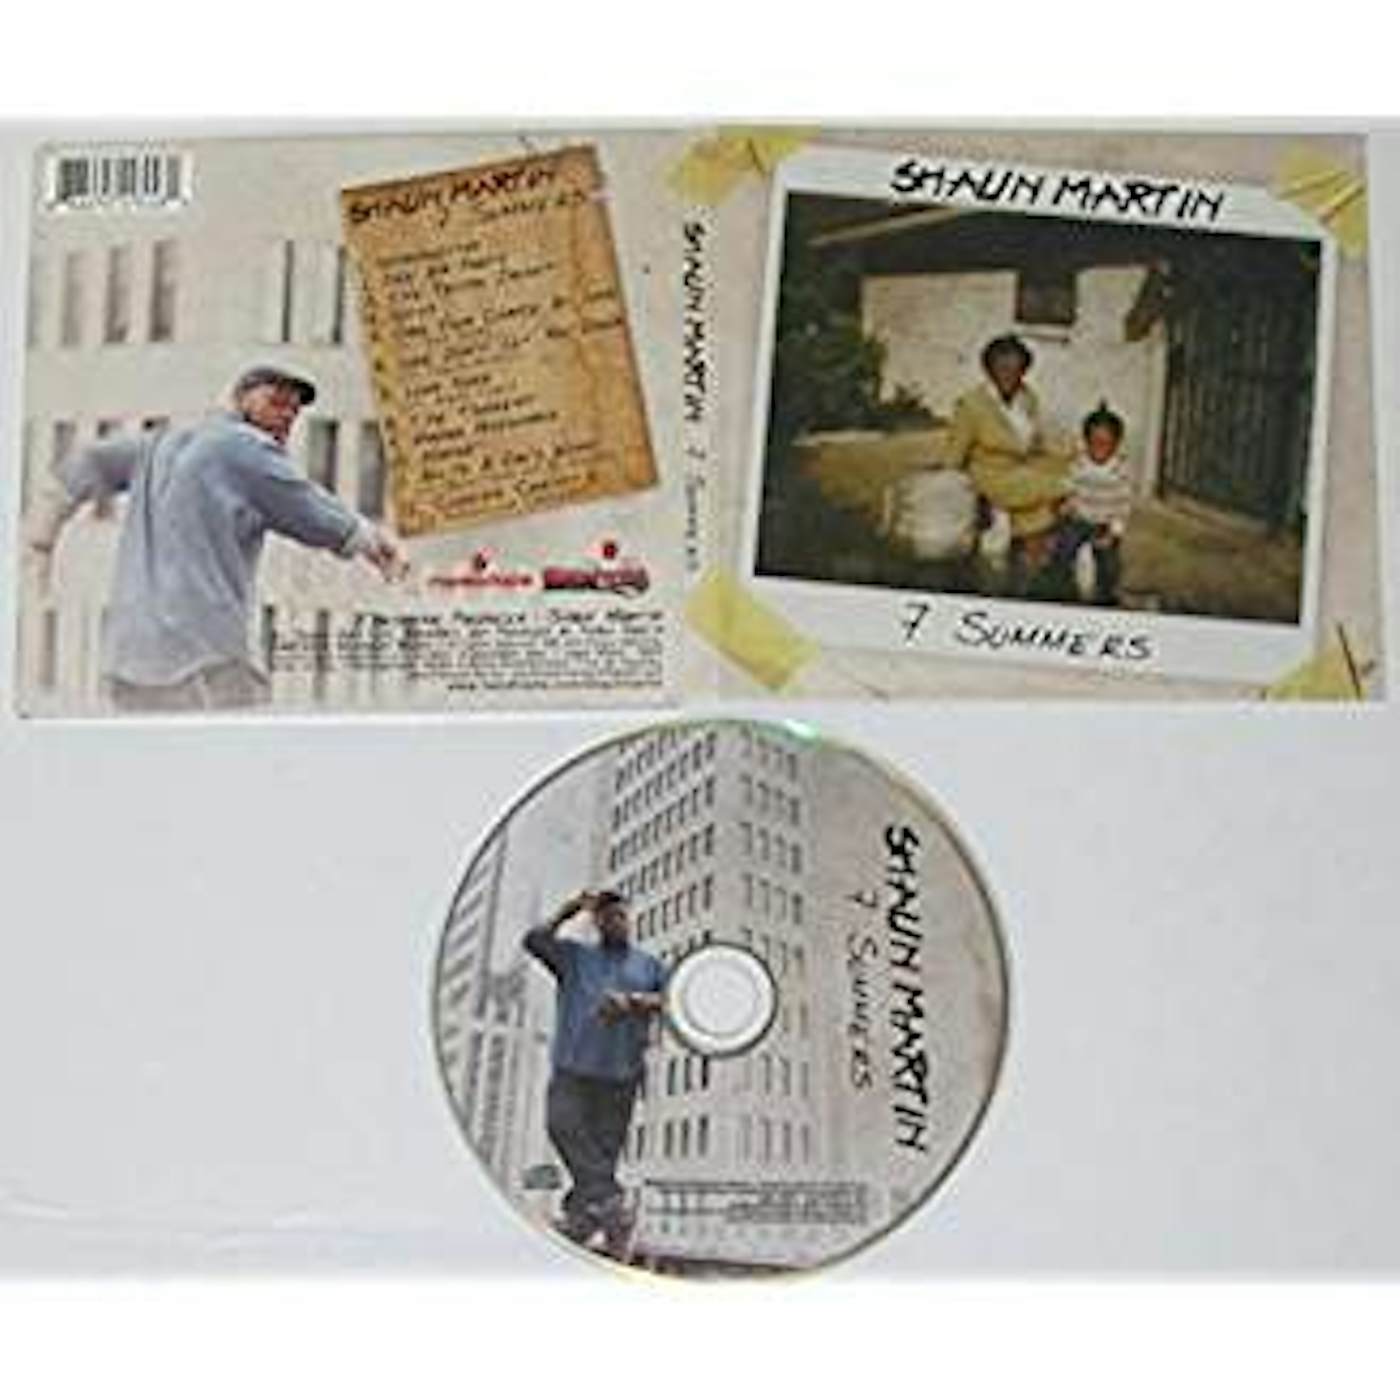 Shaun Martin 7SUMMERS CD